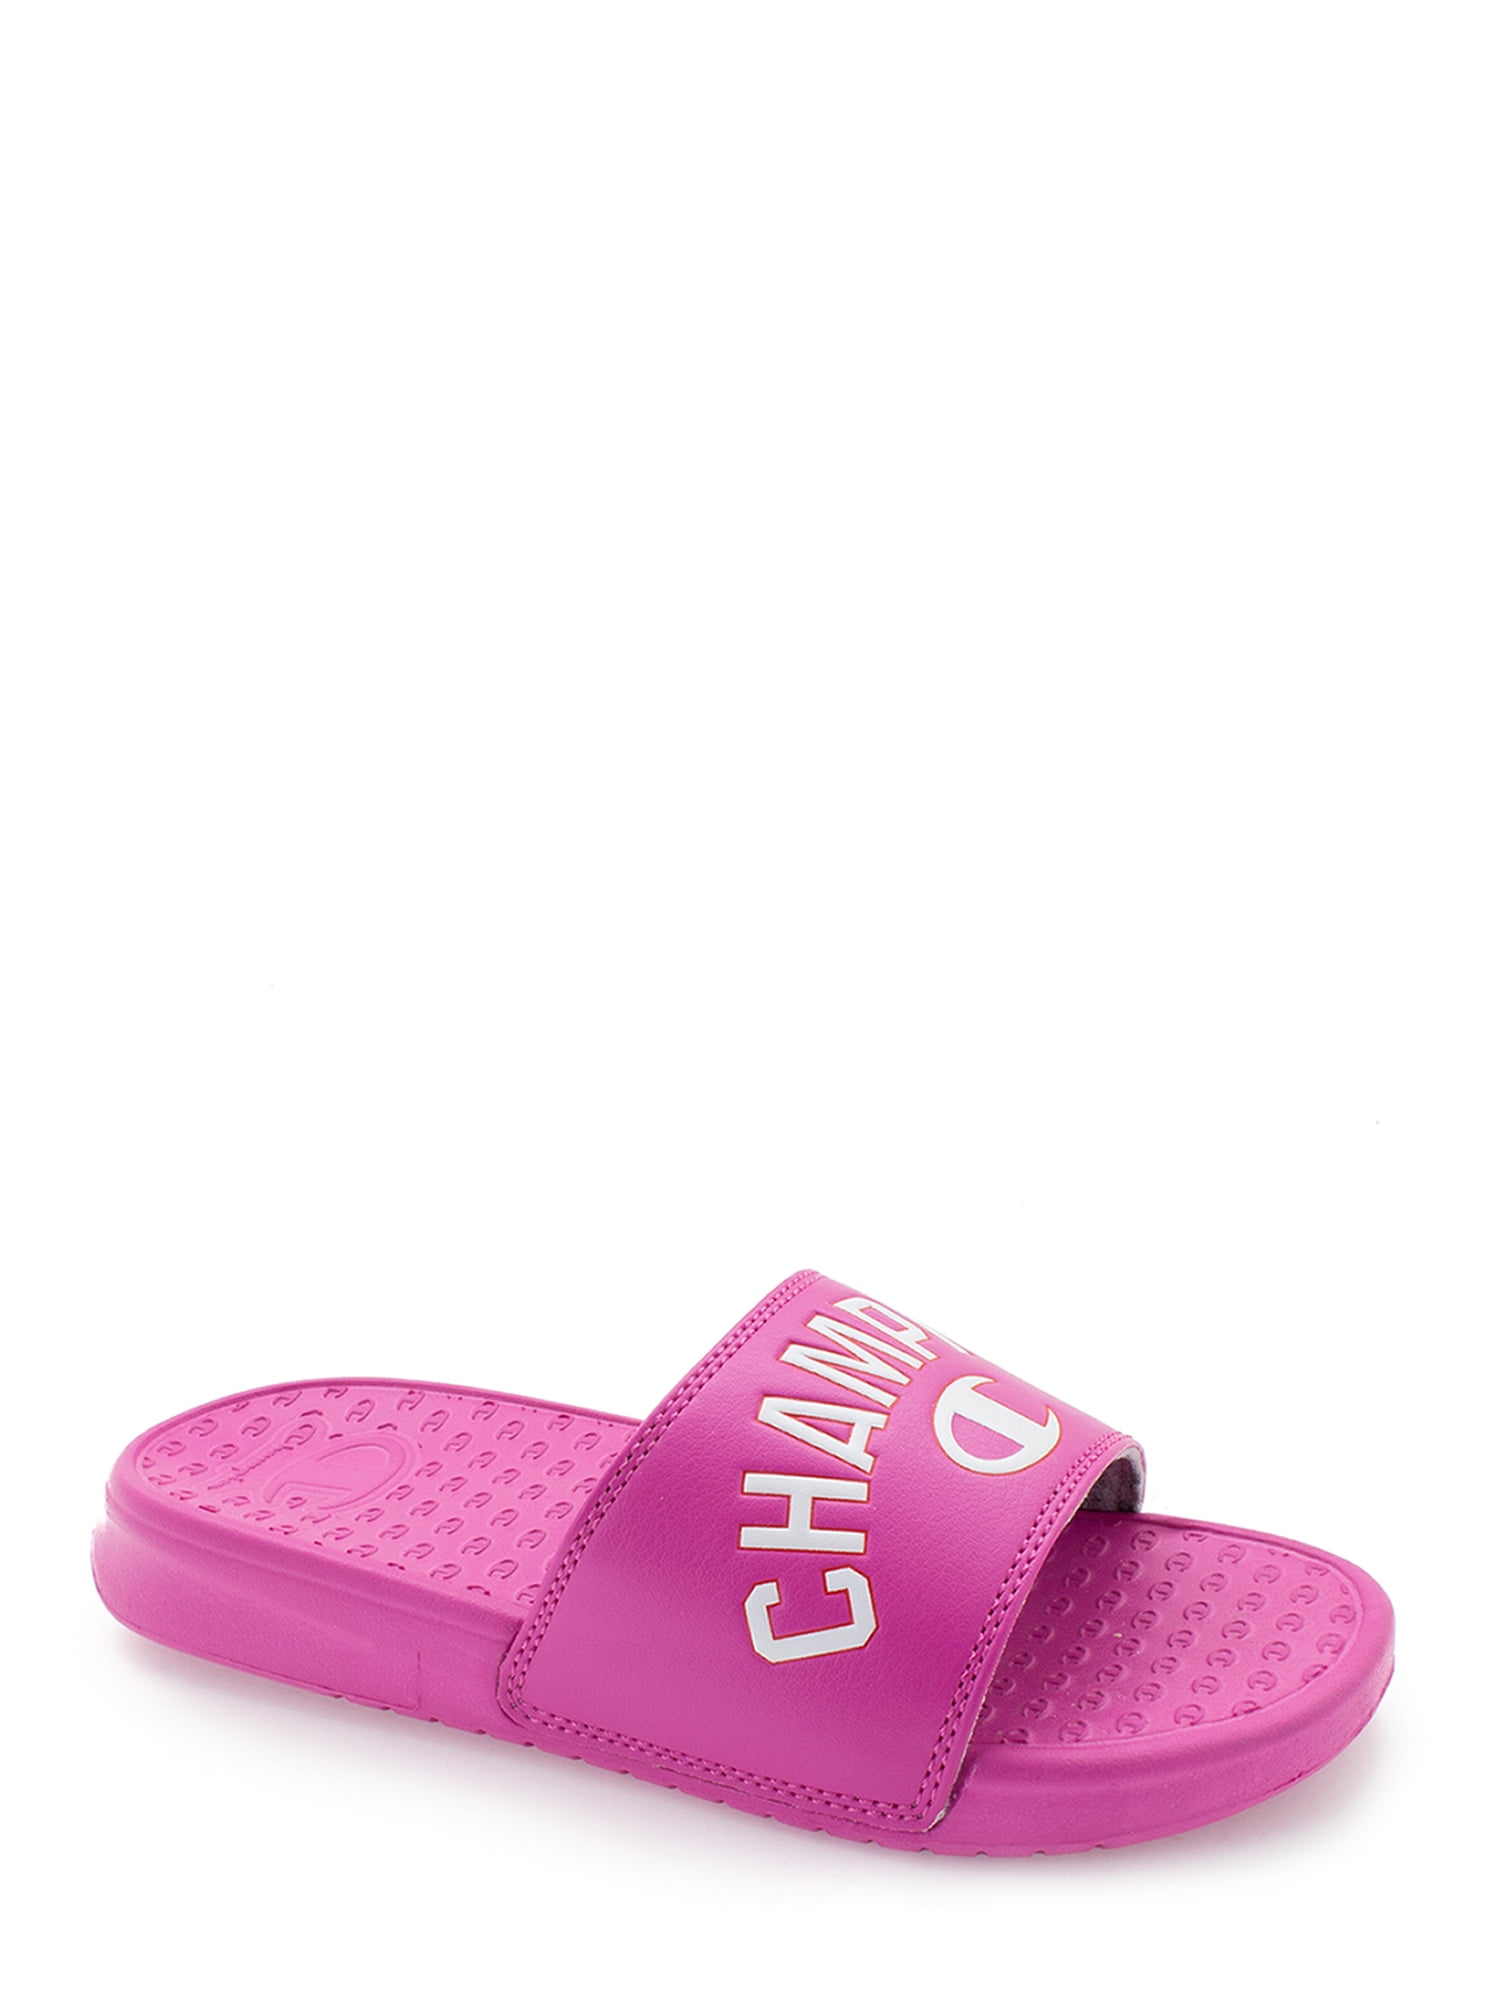 champion sandals pink